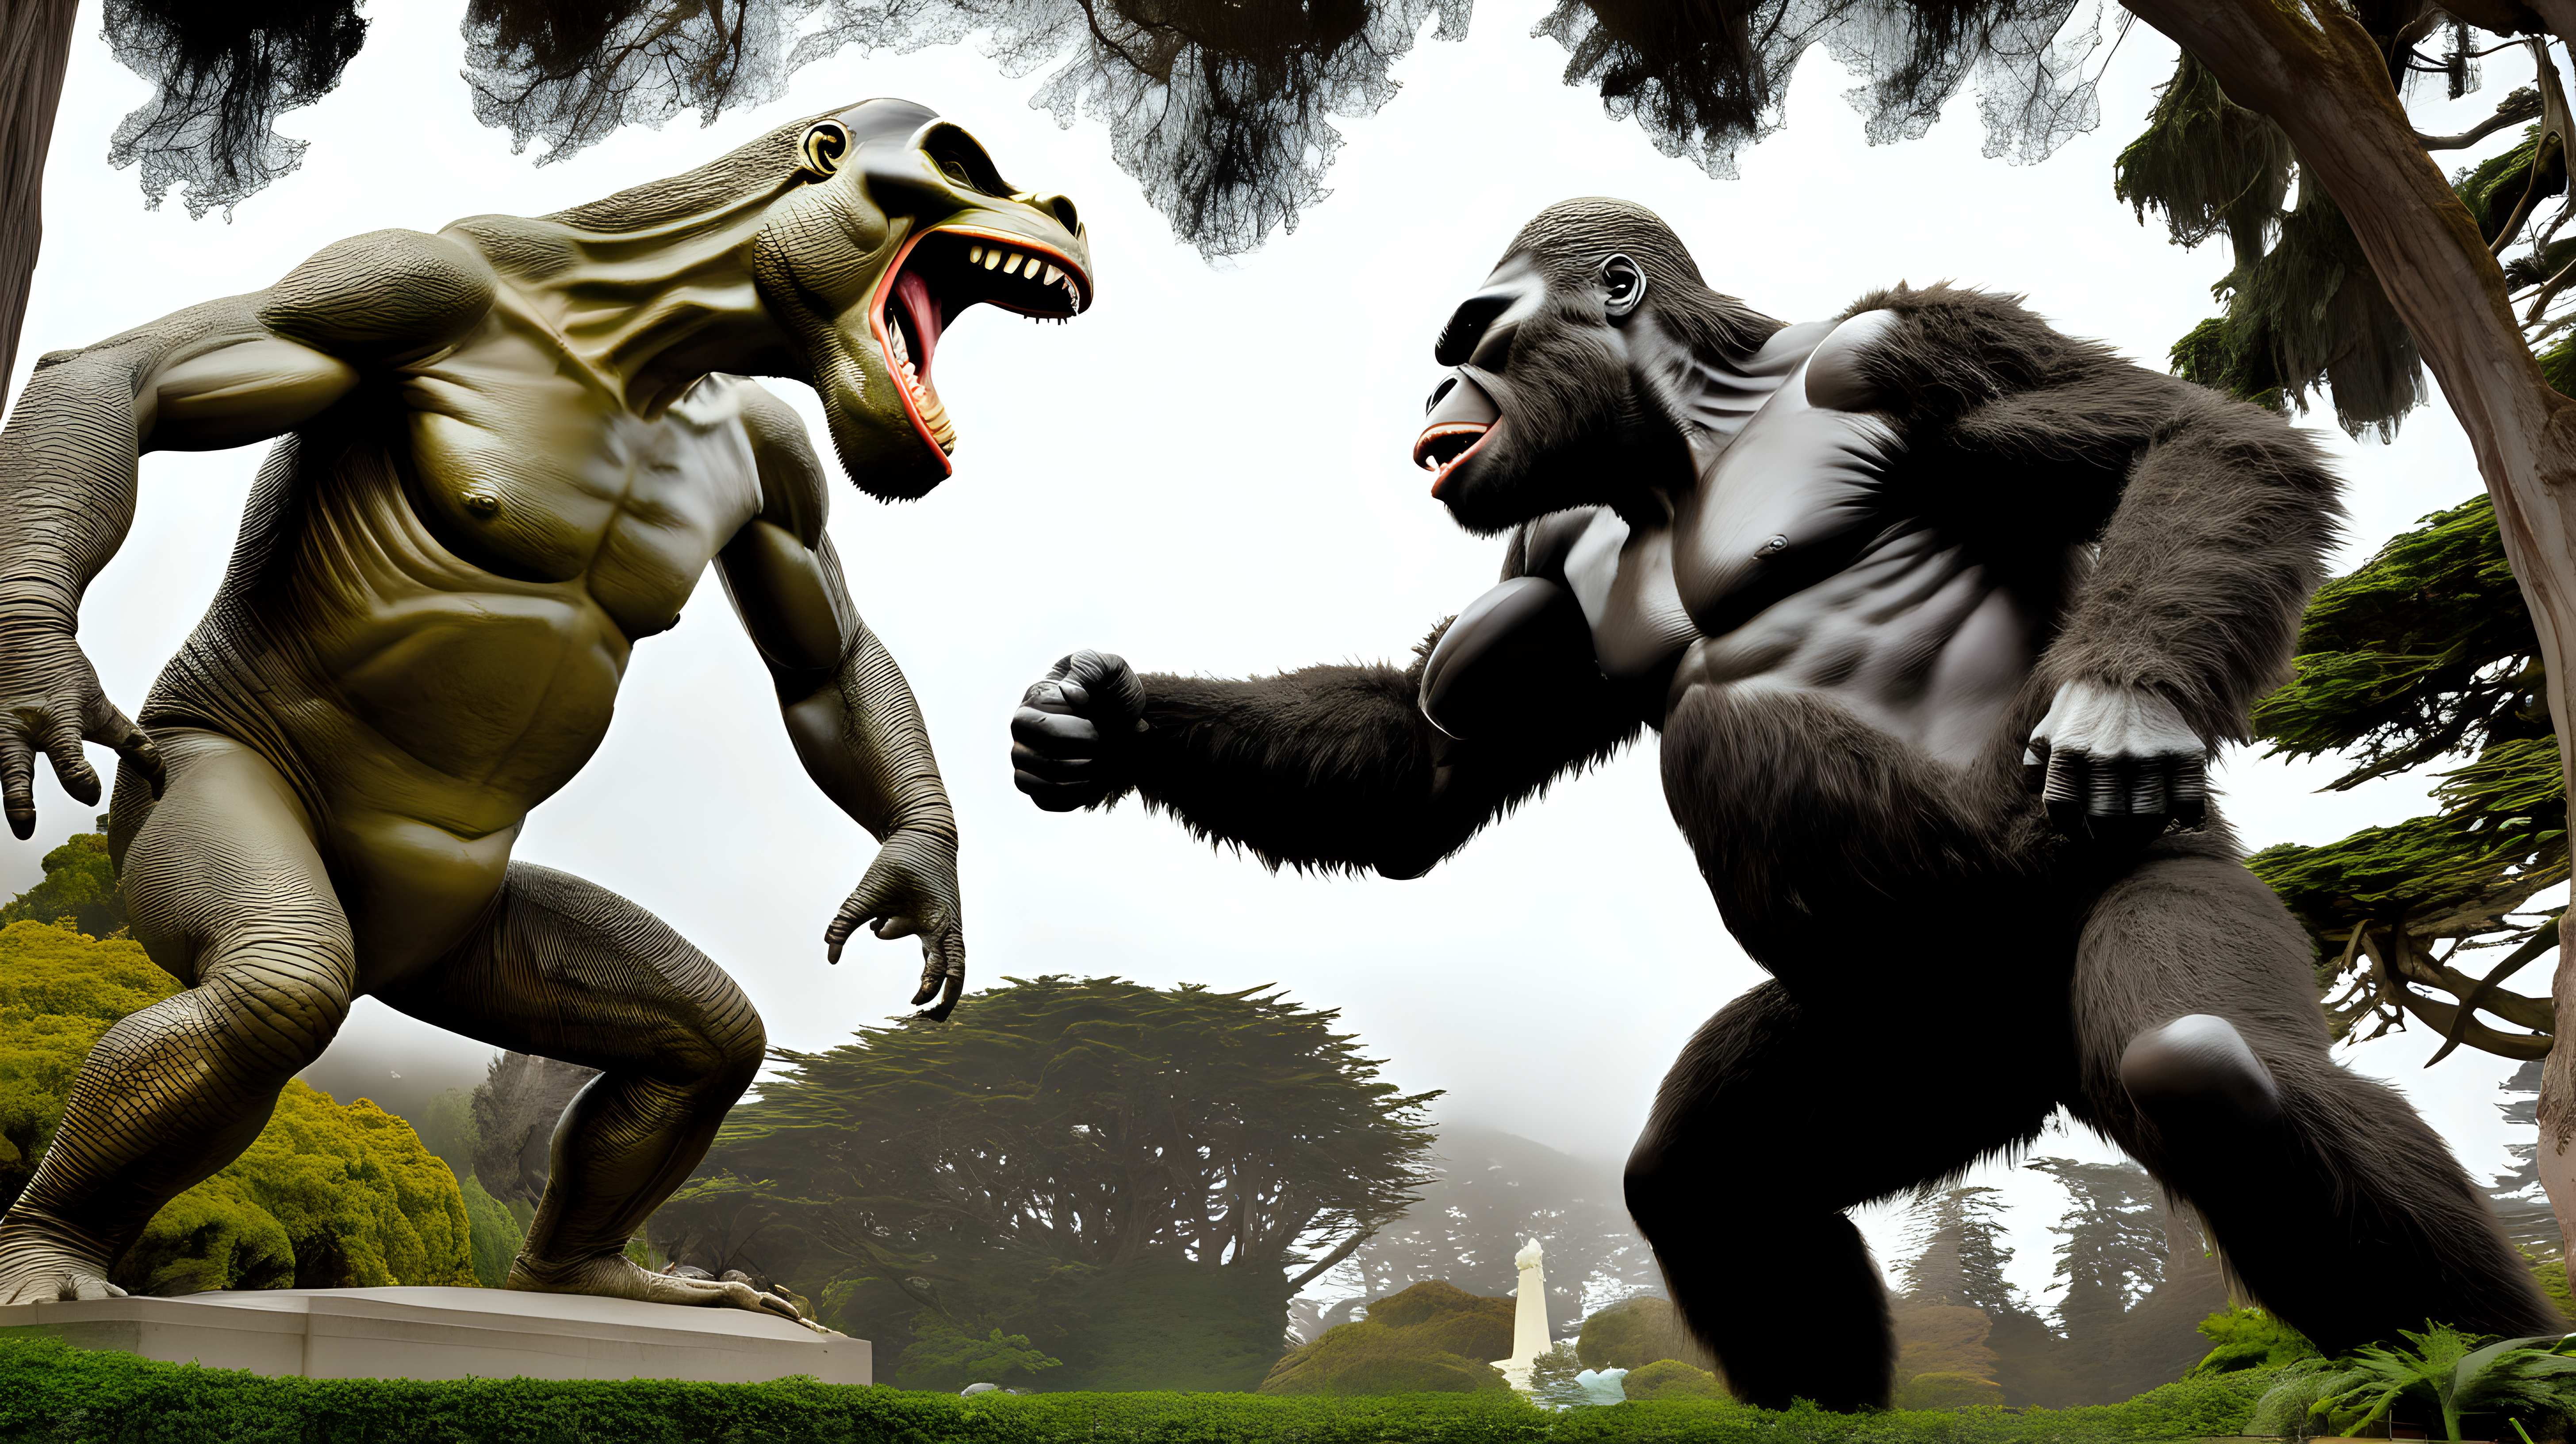 King Kong fighting a giant lizard in Golden